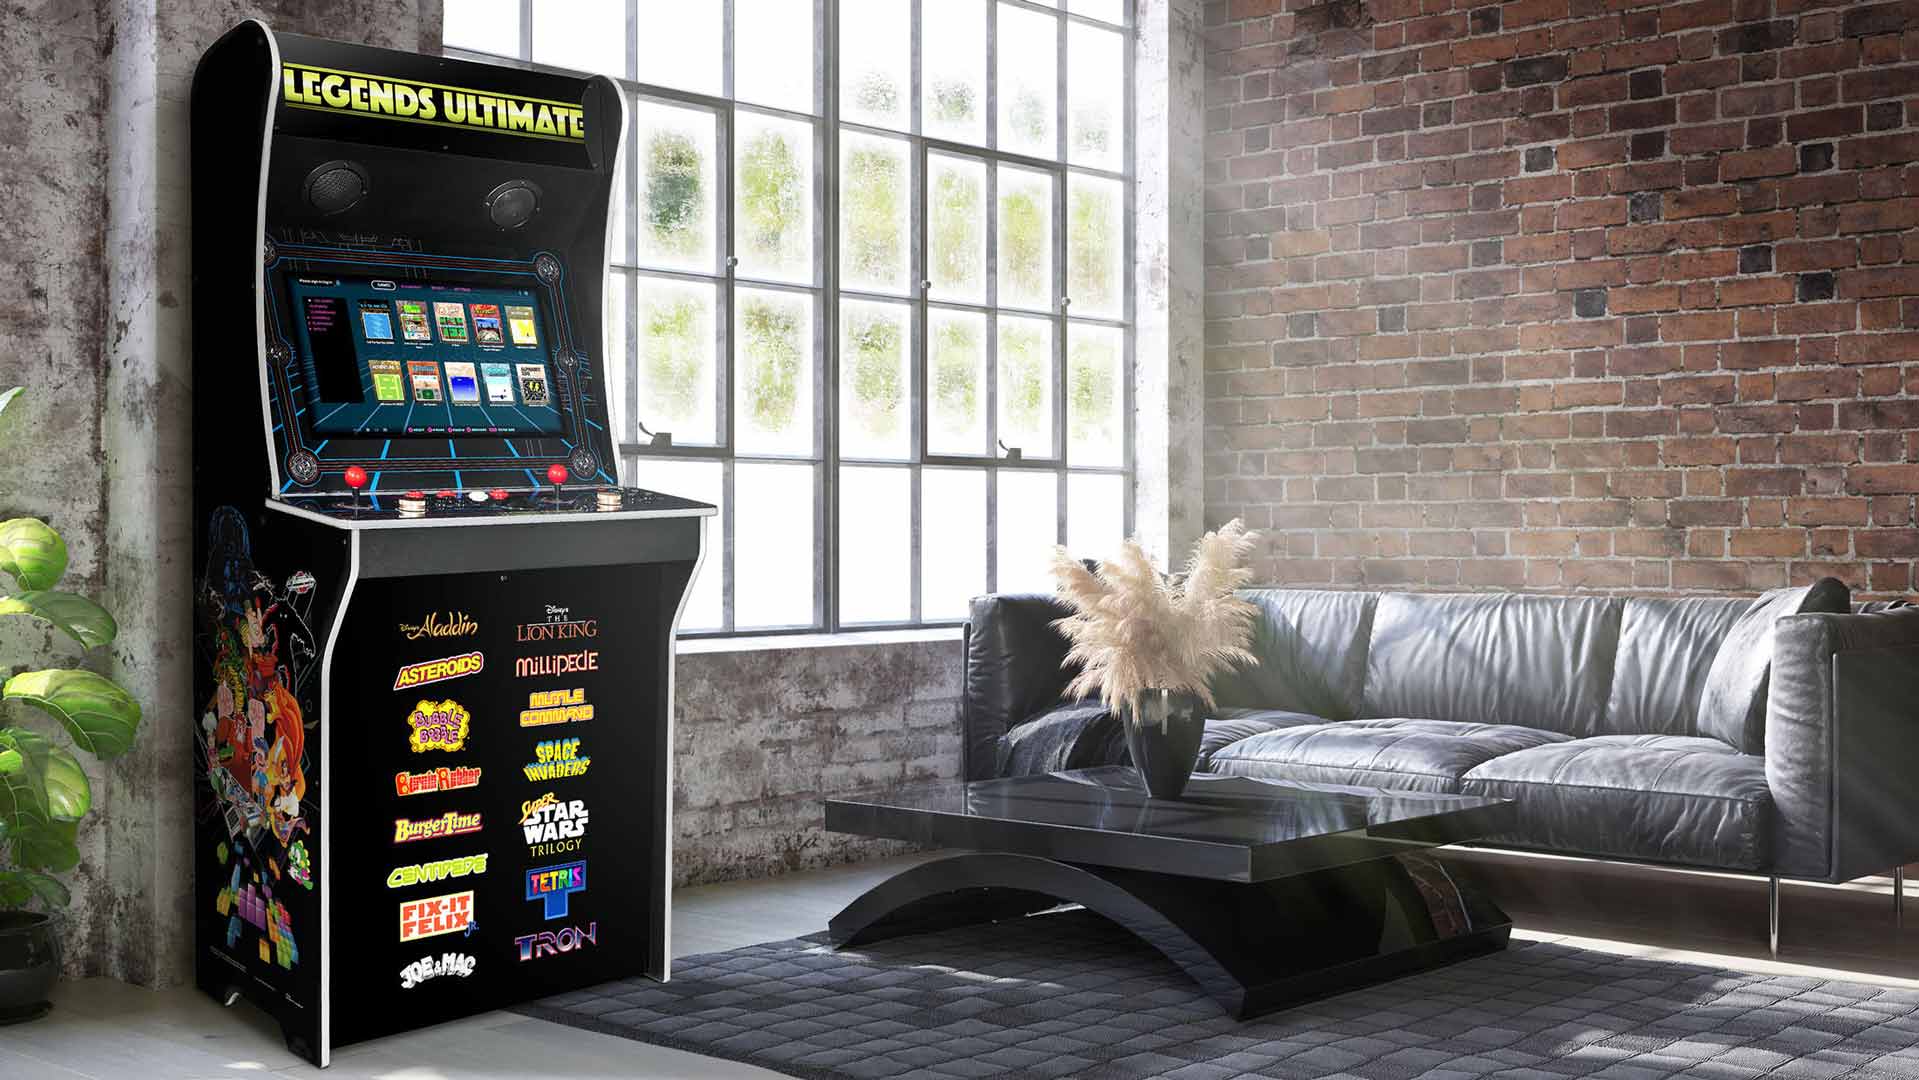 AtGames Legends Ultimate Arcade machine